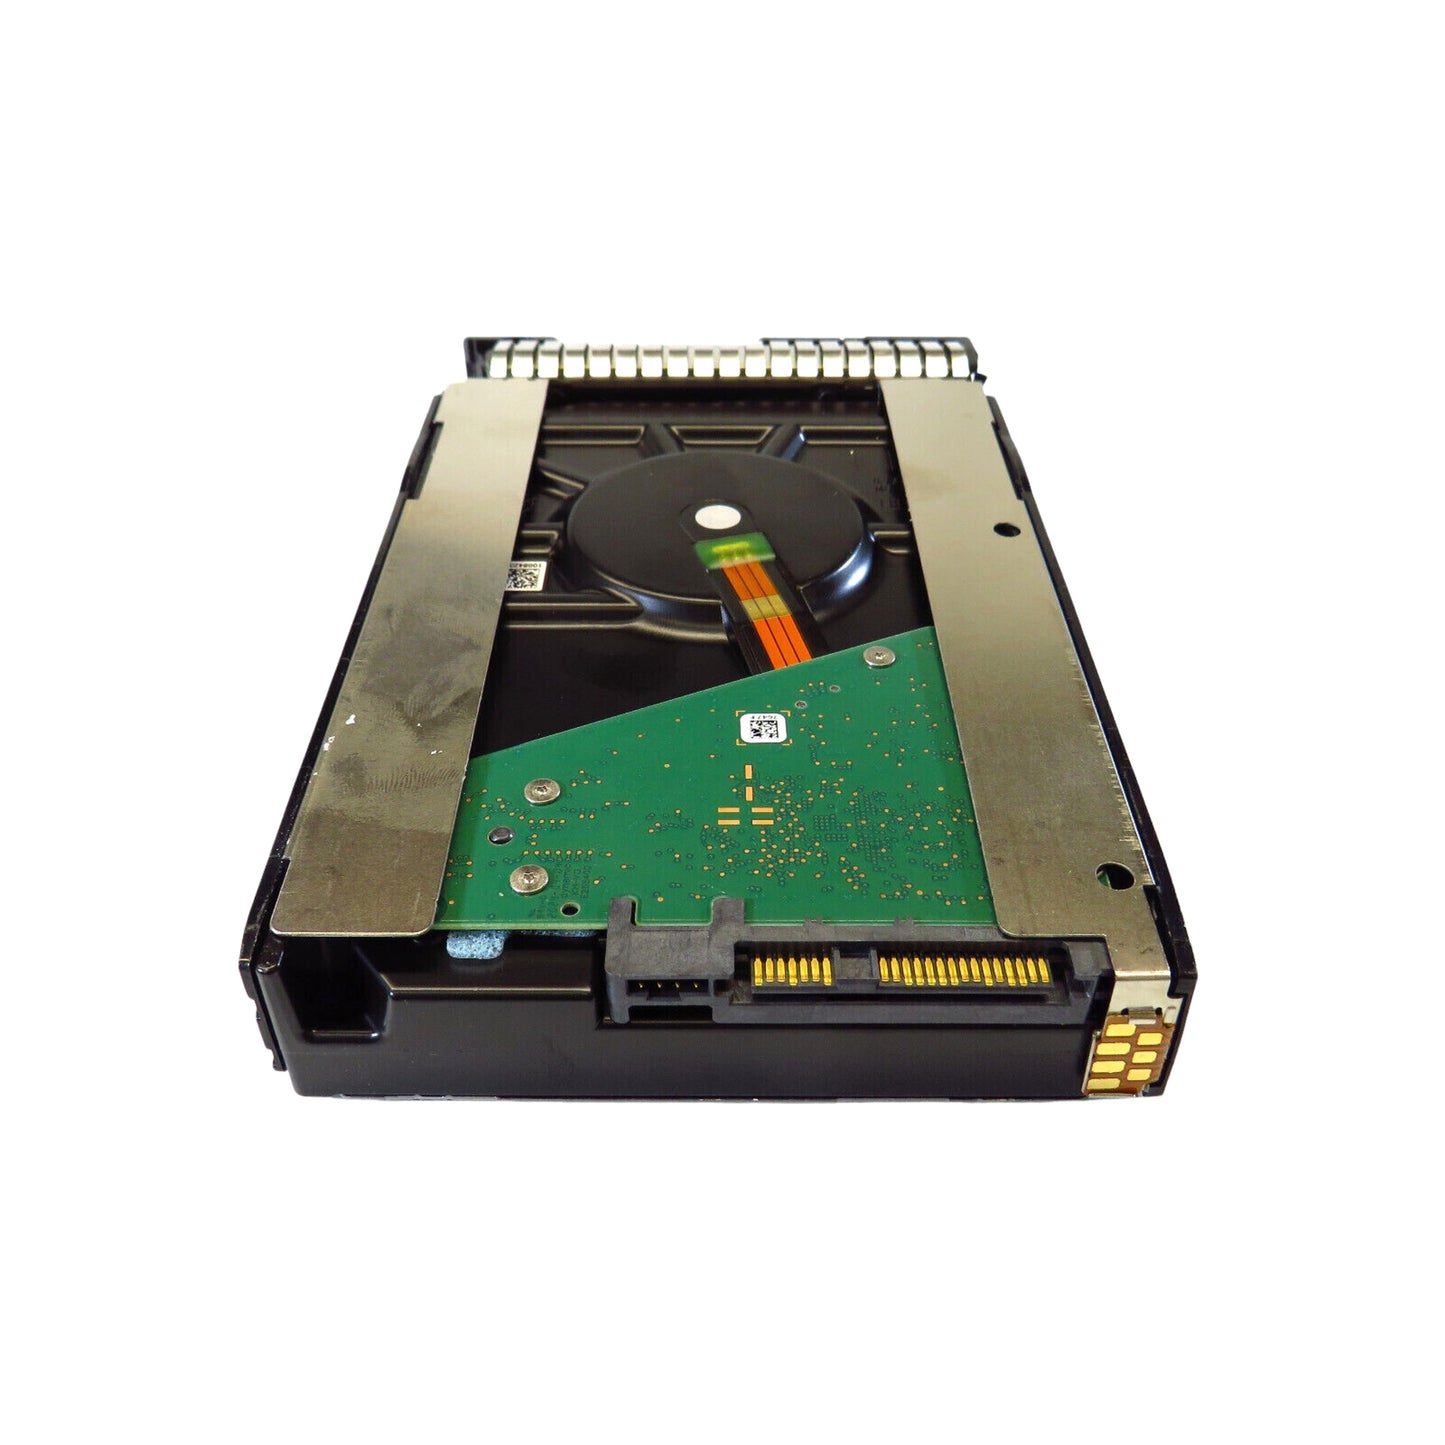 HP 820032-001 3.5" 8TB 7200RPM SAS 12Gb/s Hard Disk Drive (HDD), Silver (Refurbished)